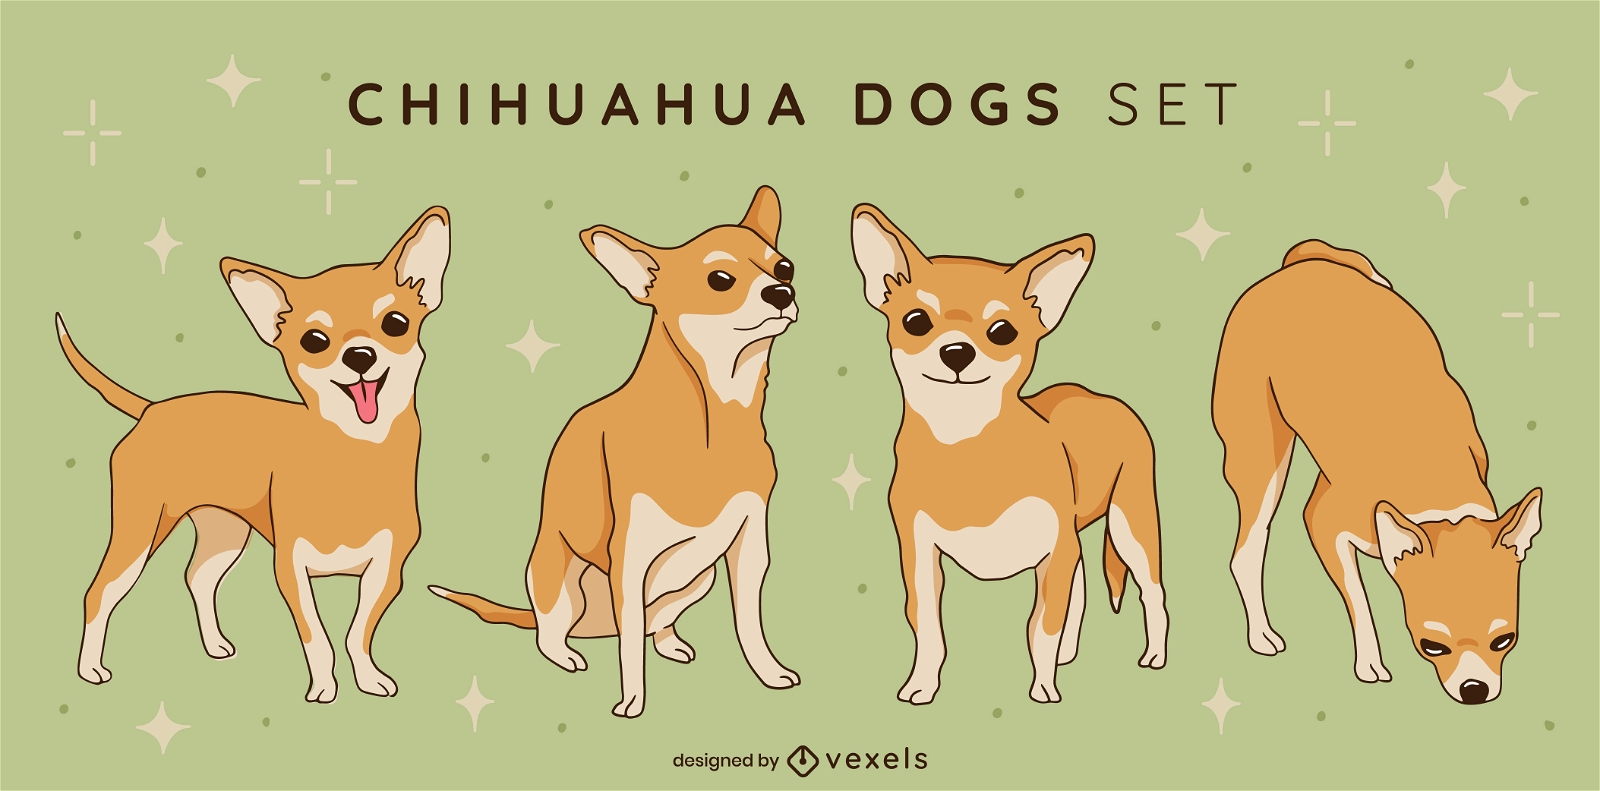 Chihuahua dogs set design